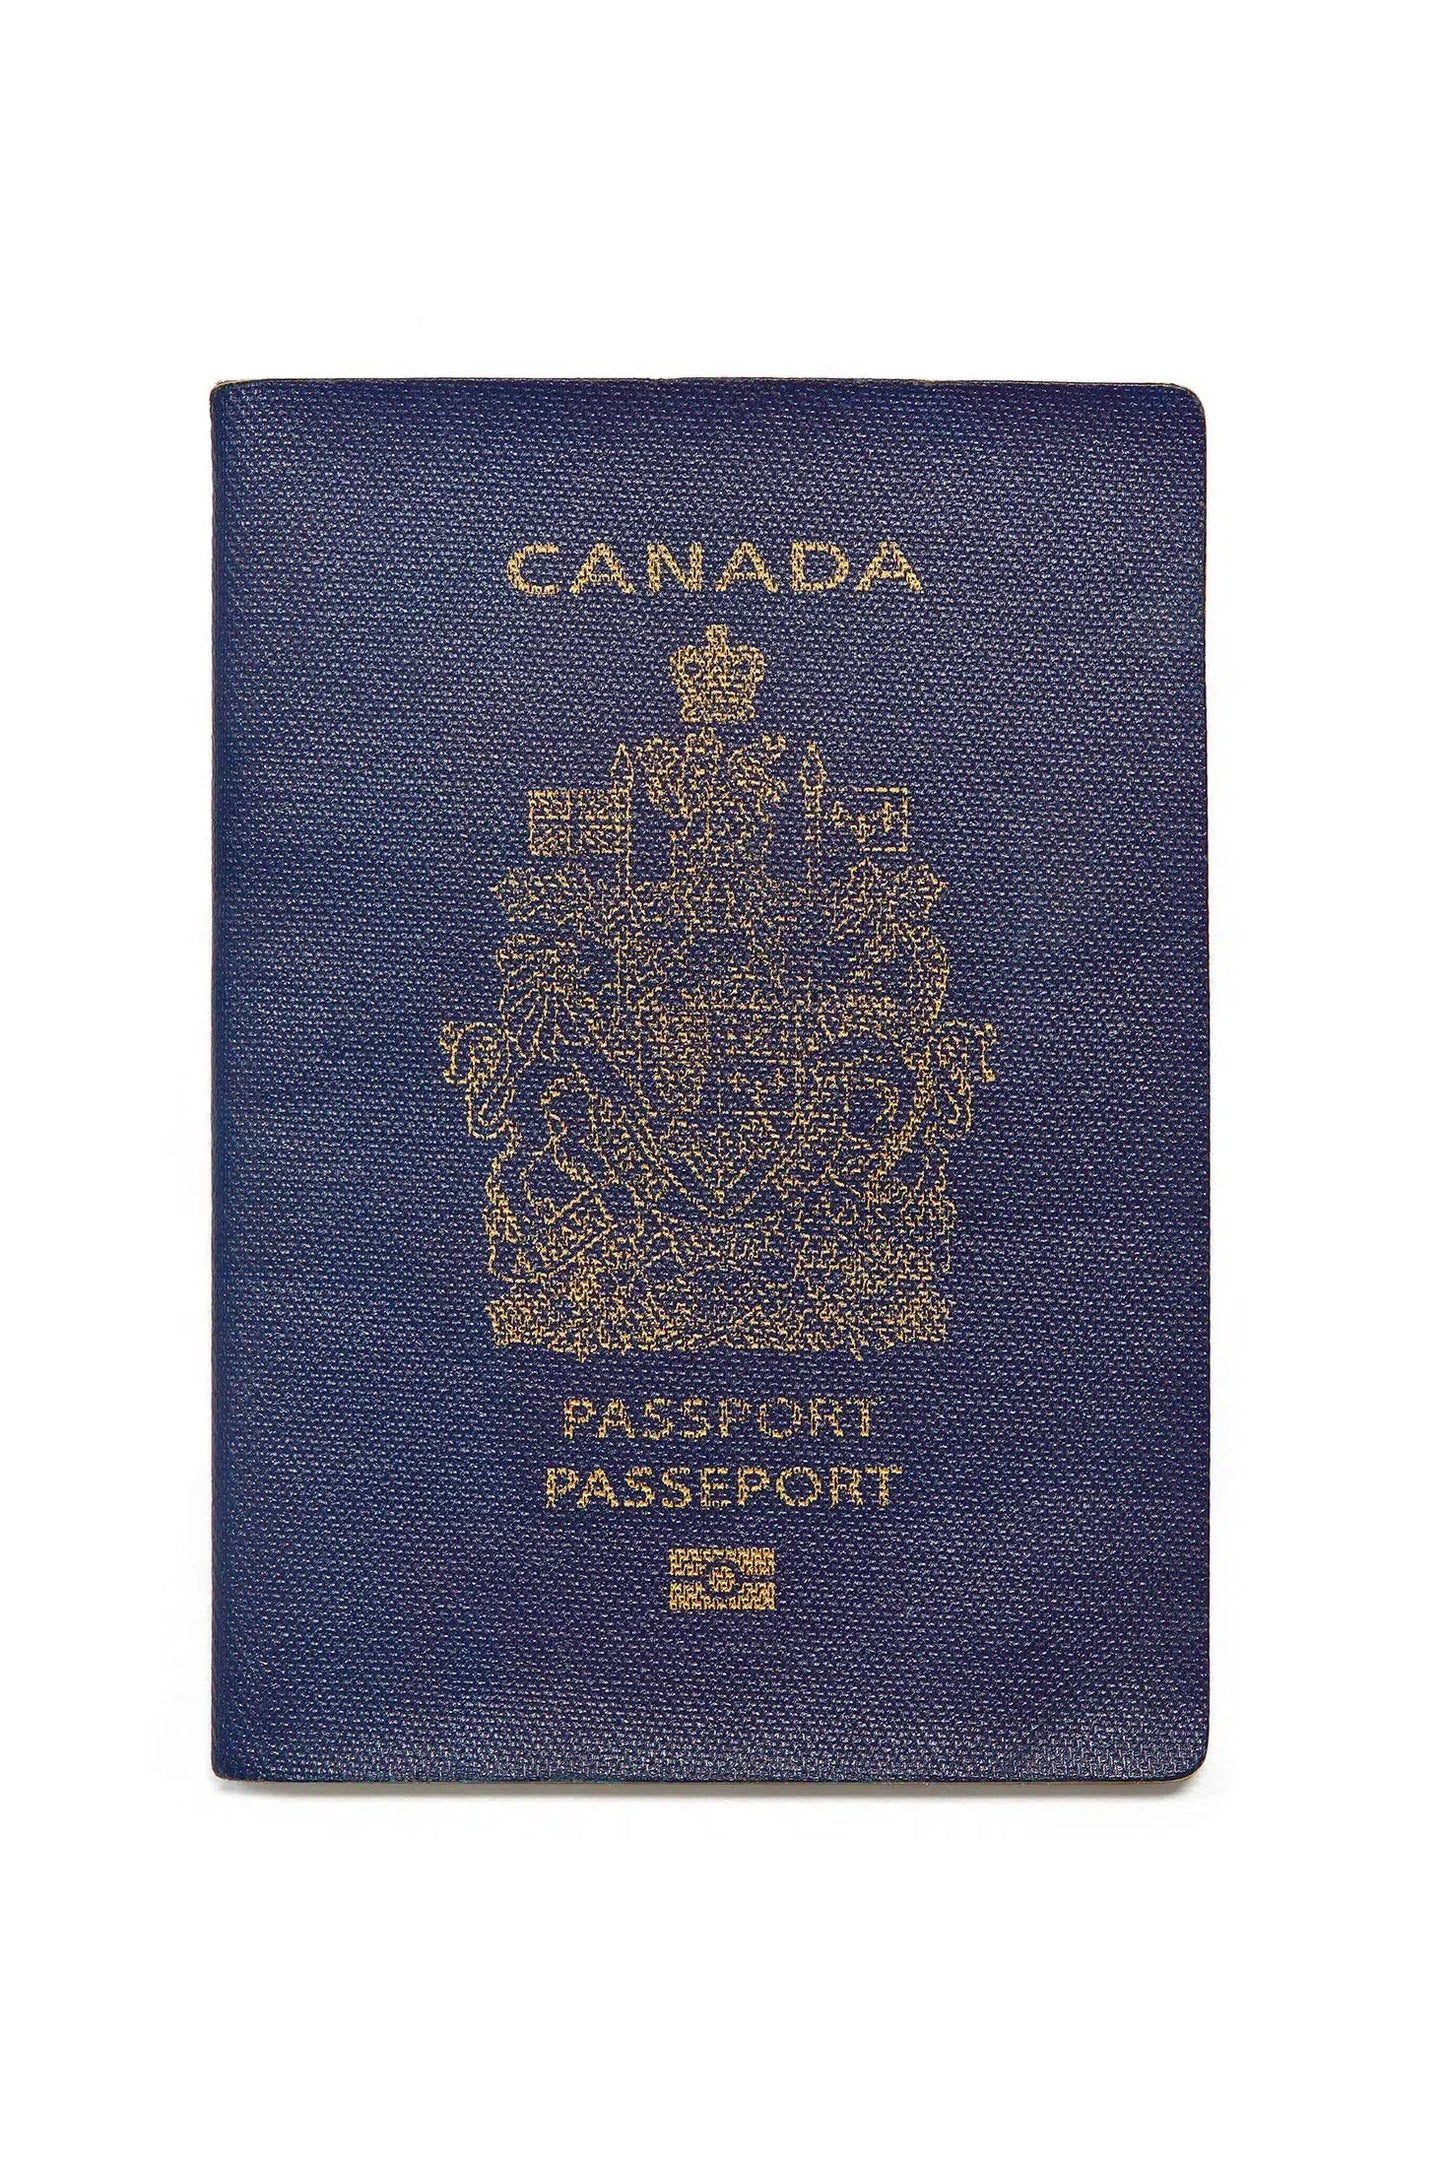 Canada Passport, by Peter Andrew-PurePhoto